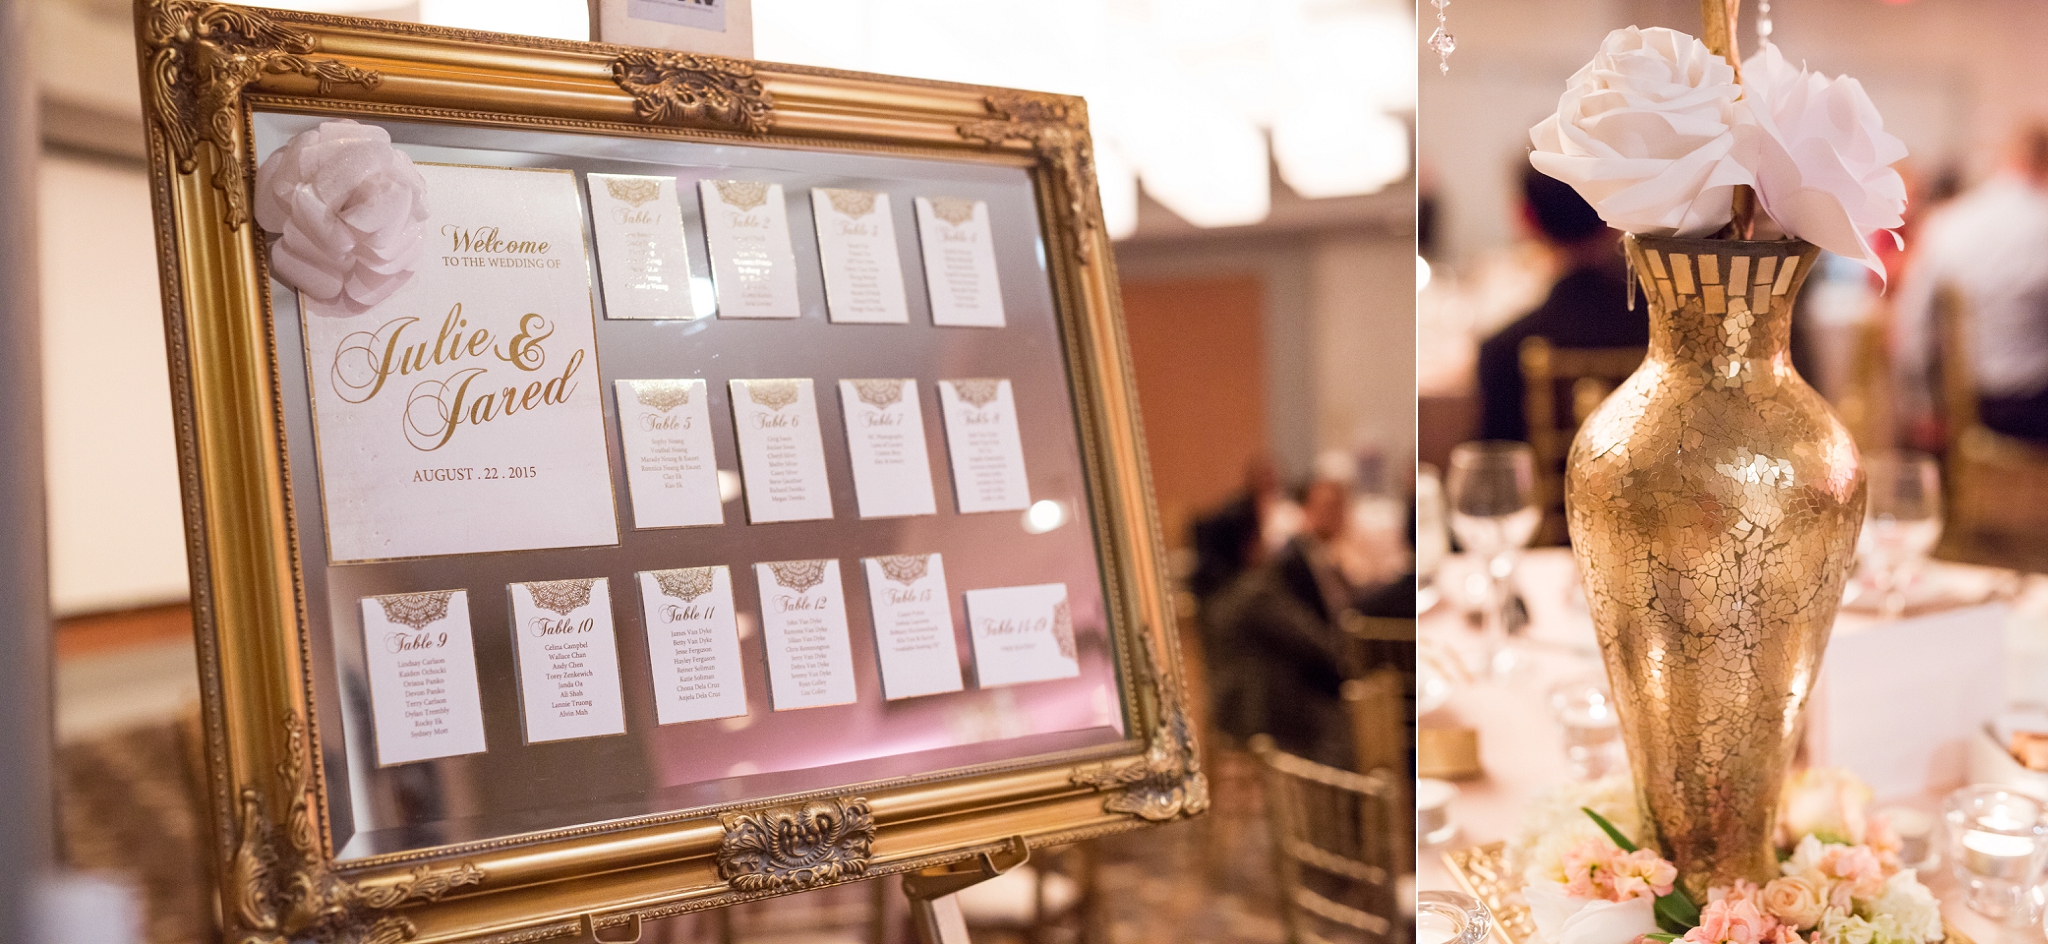 matrix hotel edmonton wedding photos blush and gold wedding decor seating chart